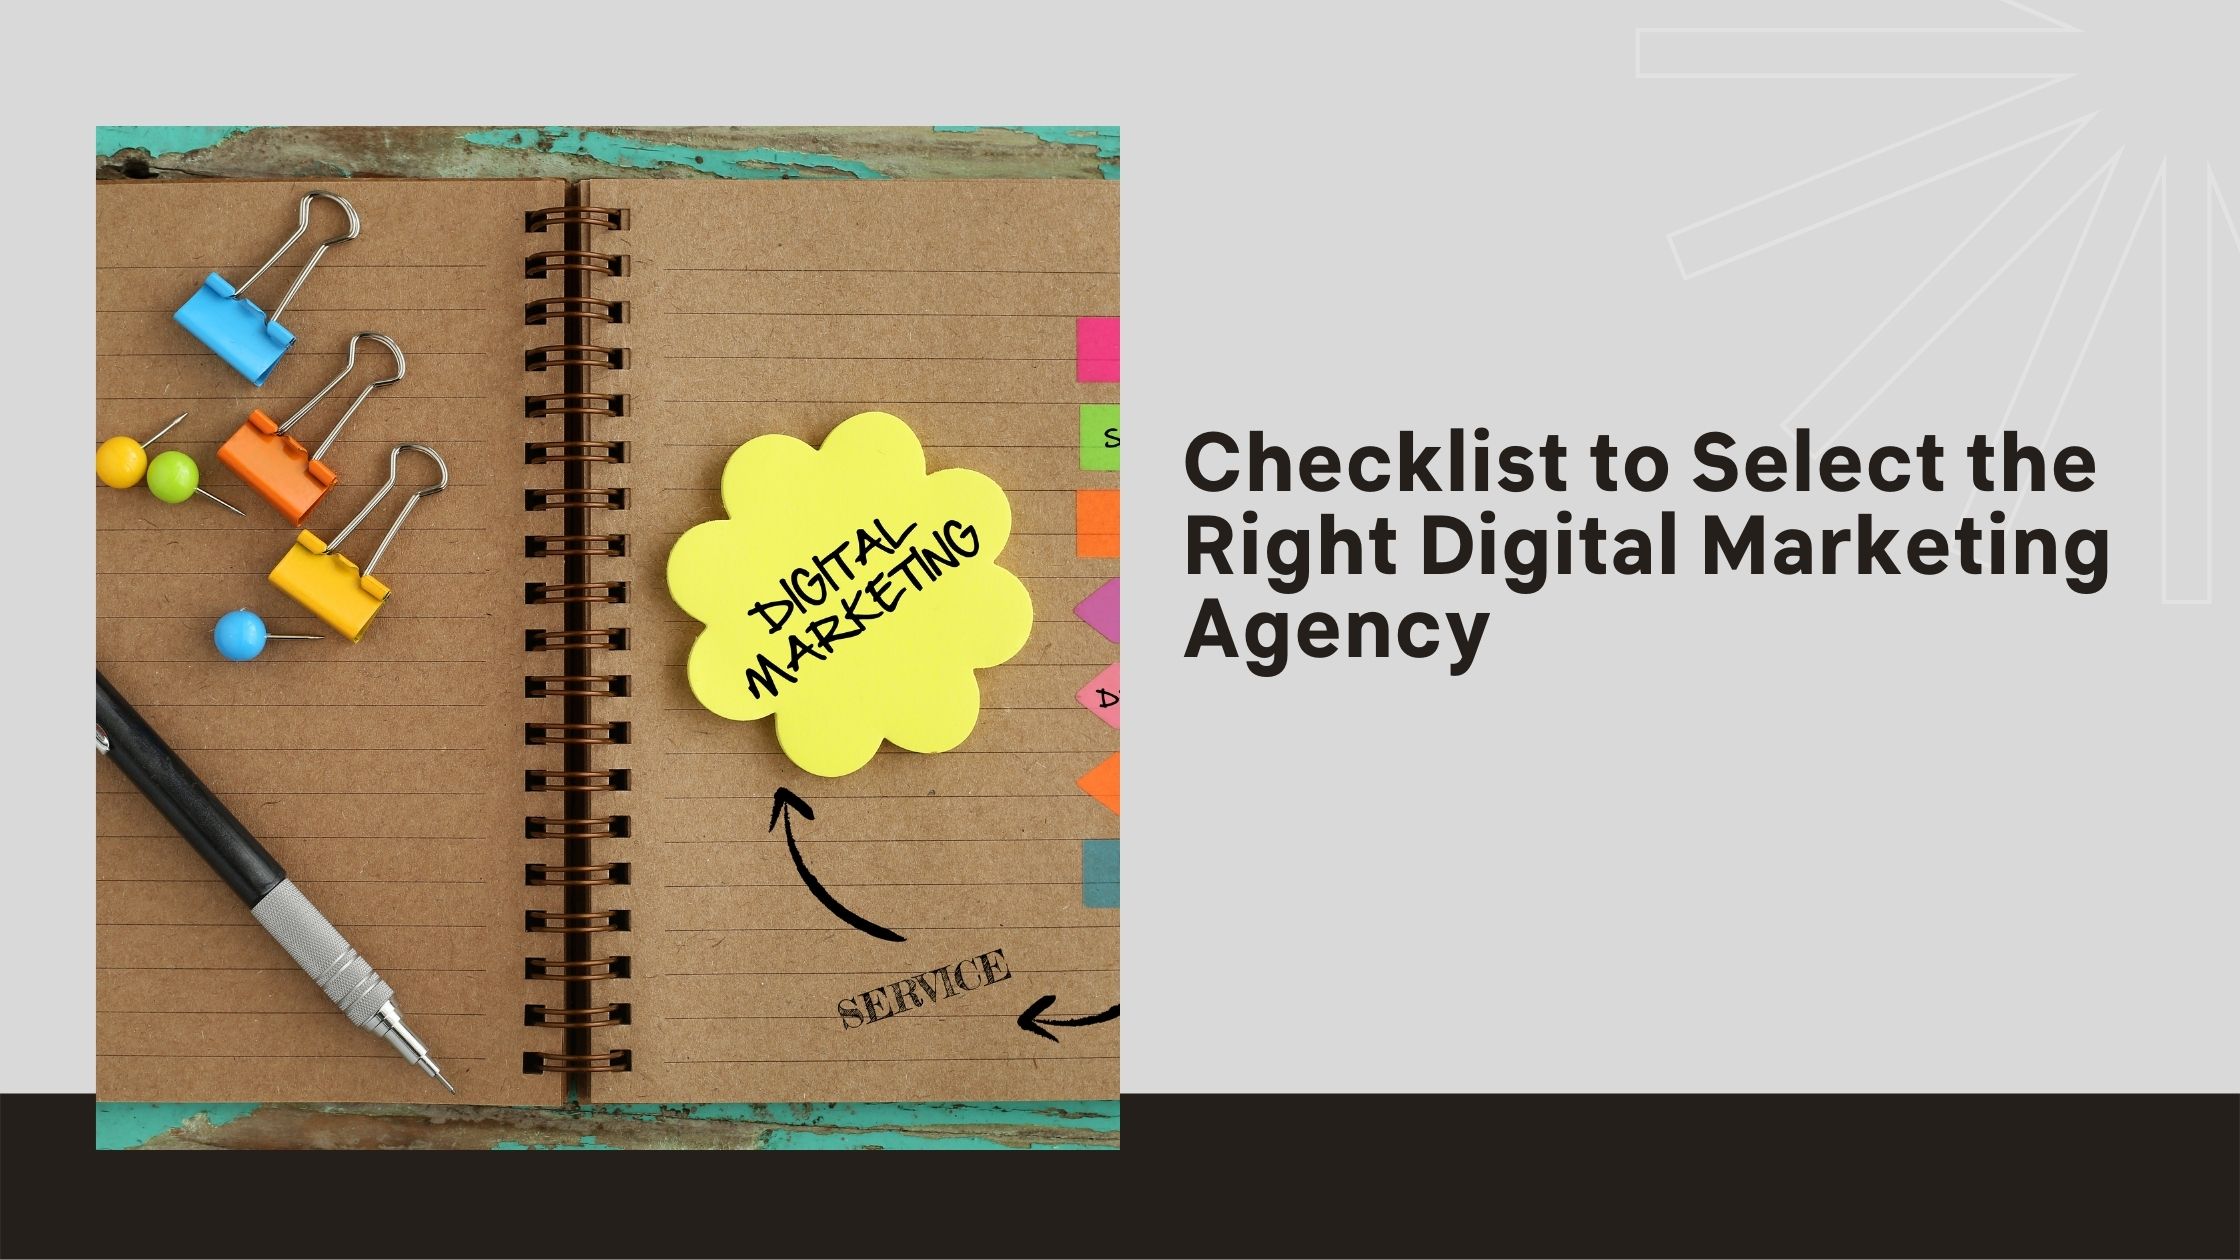 public/uploads/2021/08/Checklist-to-Select-the-Right-Digital-Marketing-Agency.jpg